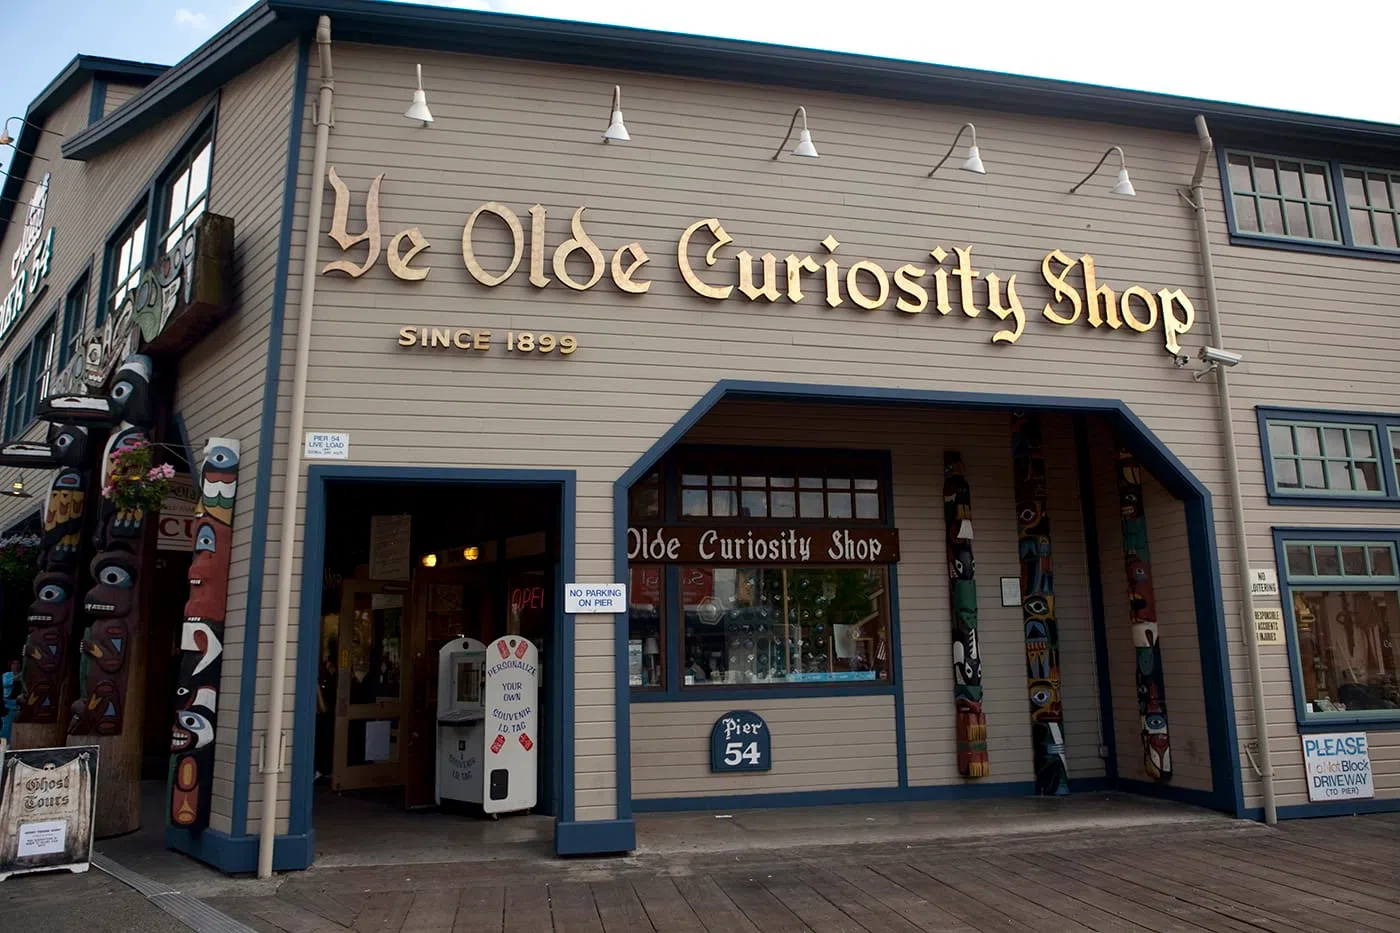 Exterior of Ye Olde Curiosity Shop